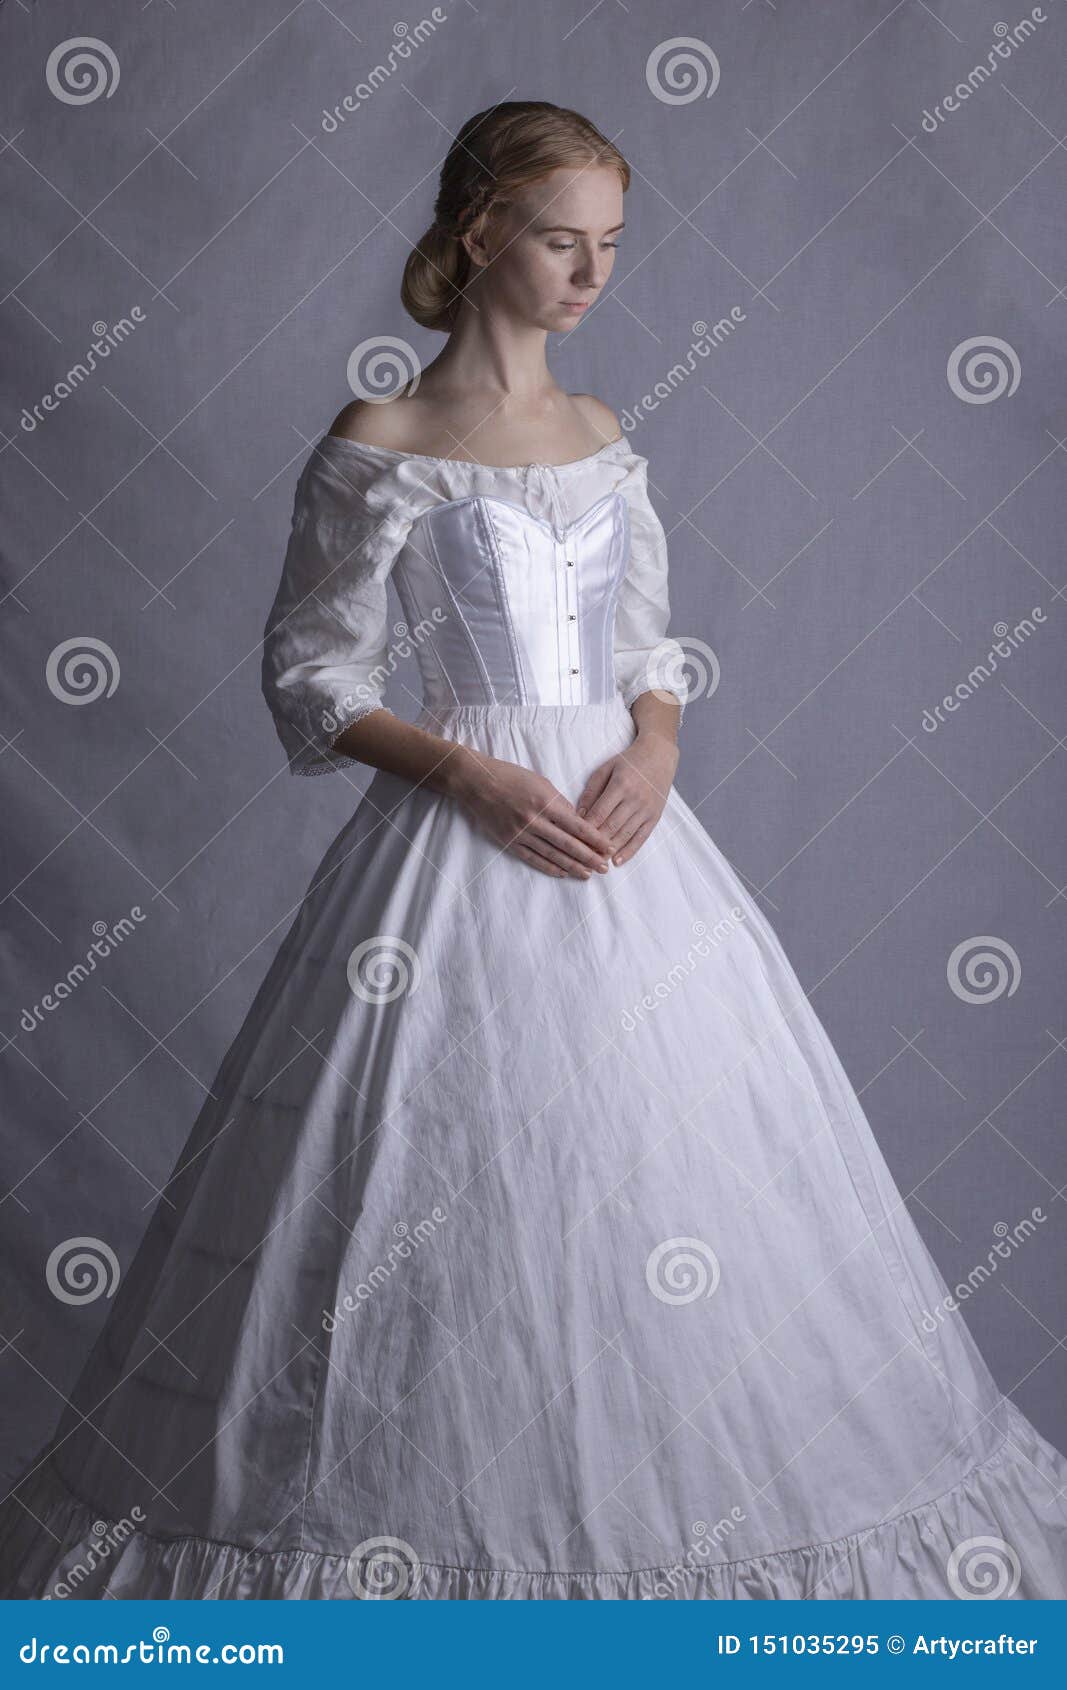 https://thumbs.dreamstime.com/z/mid-victorian-woman-underwear-consisting-linen-chemise-satin-corset-cotton-petticoat-crinoline-victorian-woman-151035295.jpg